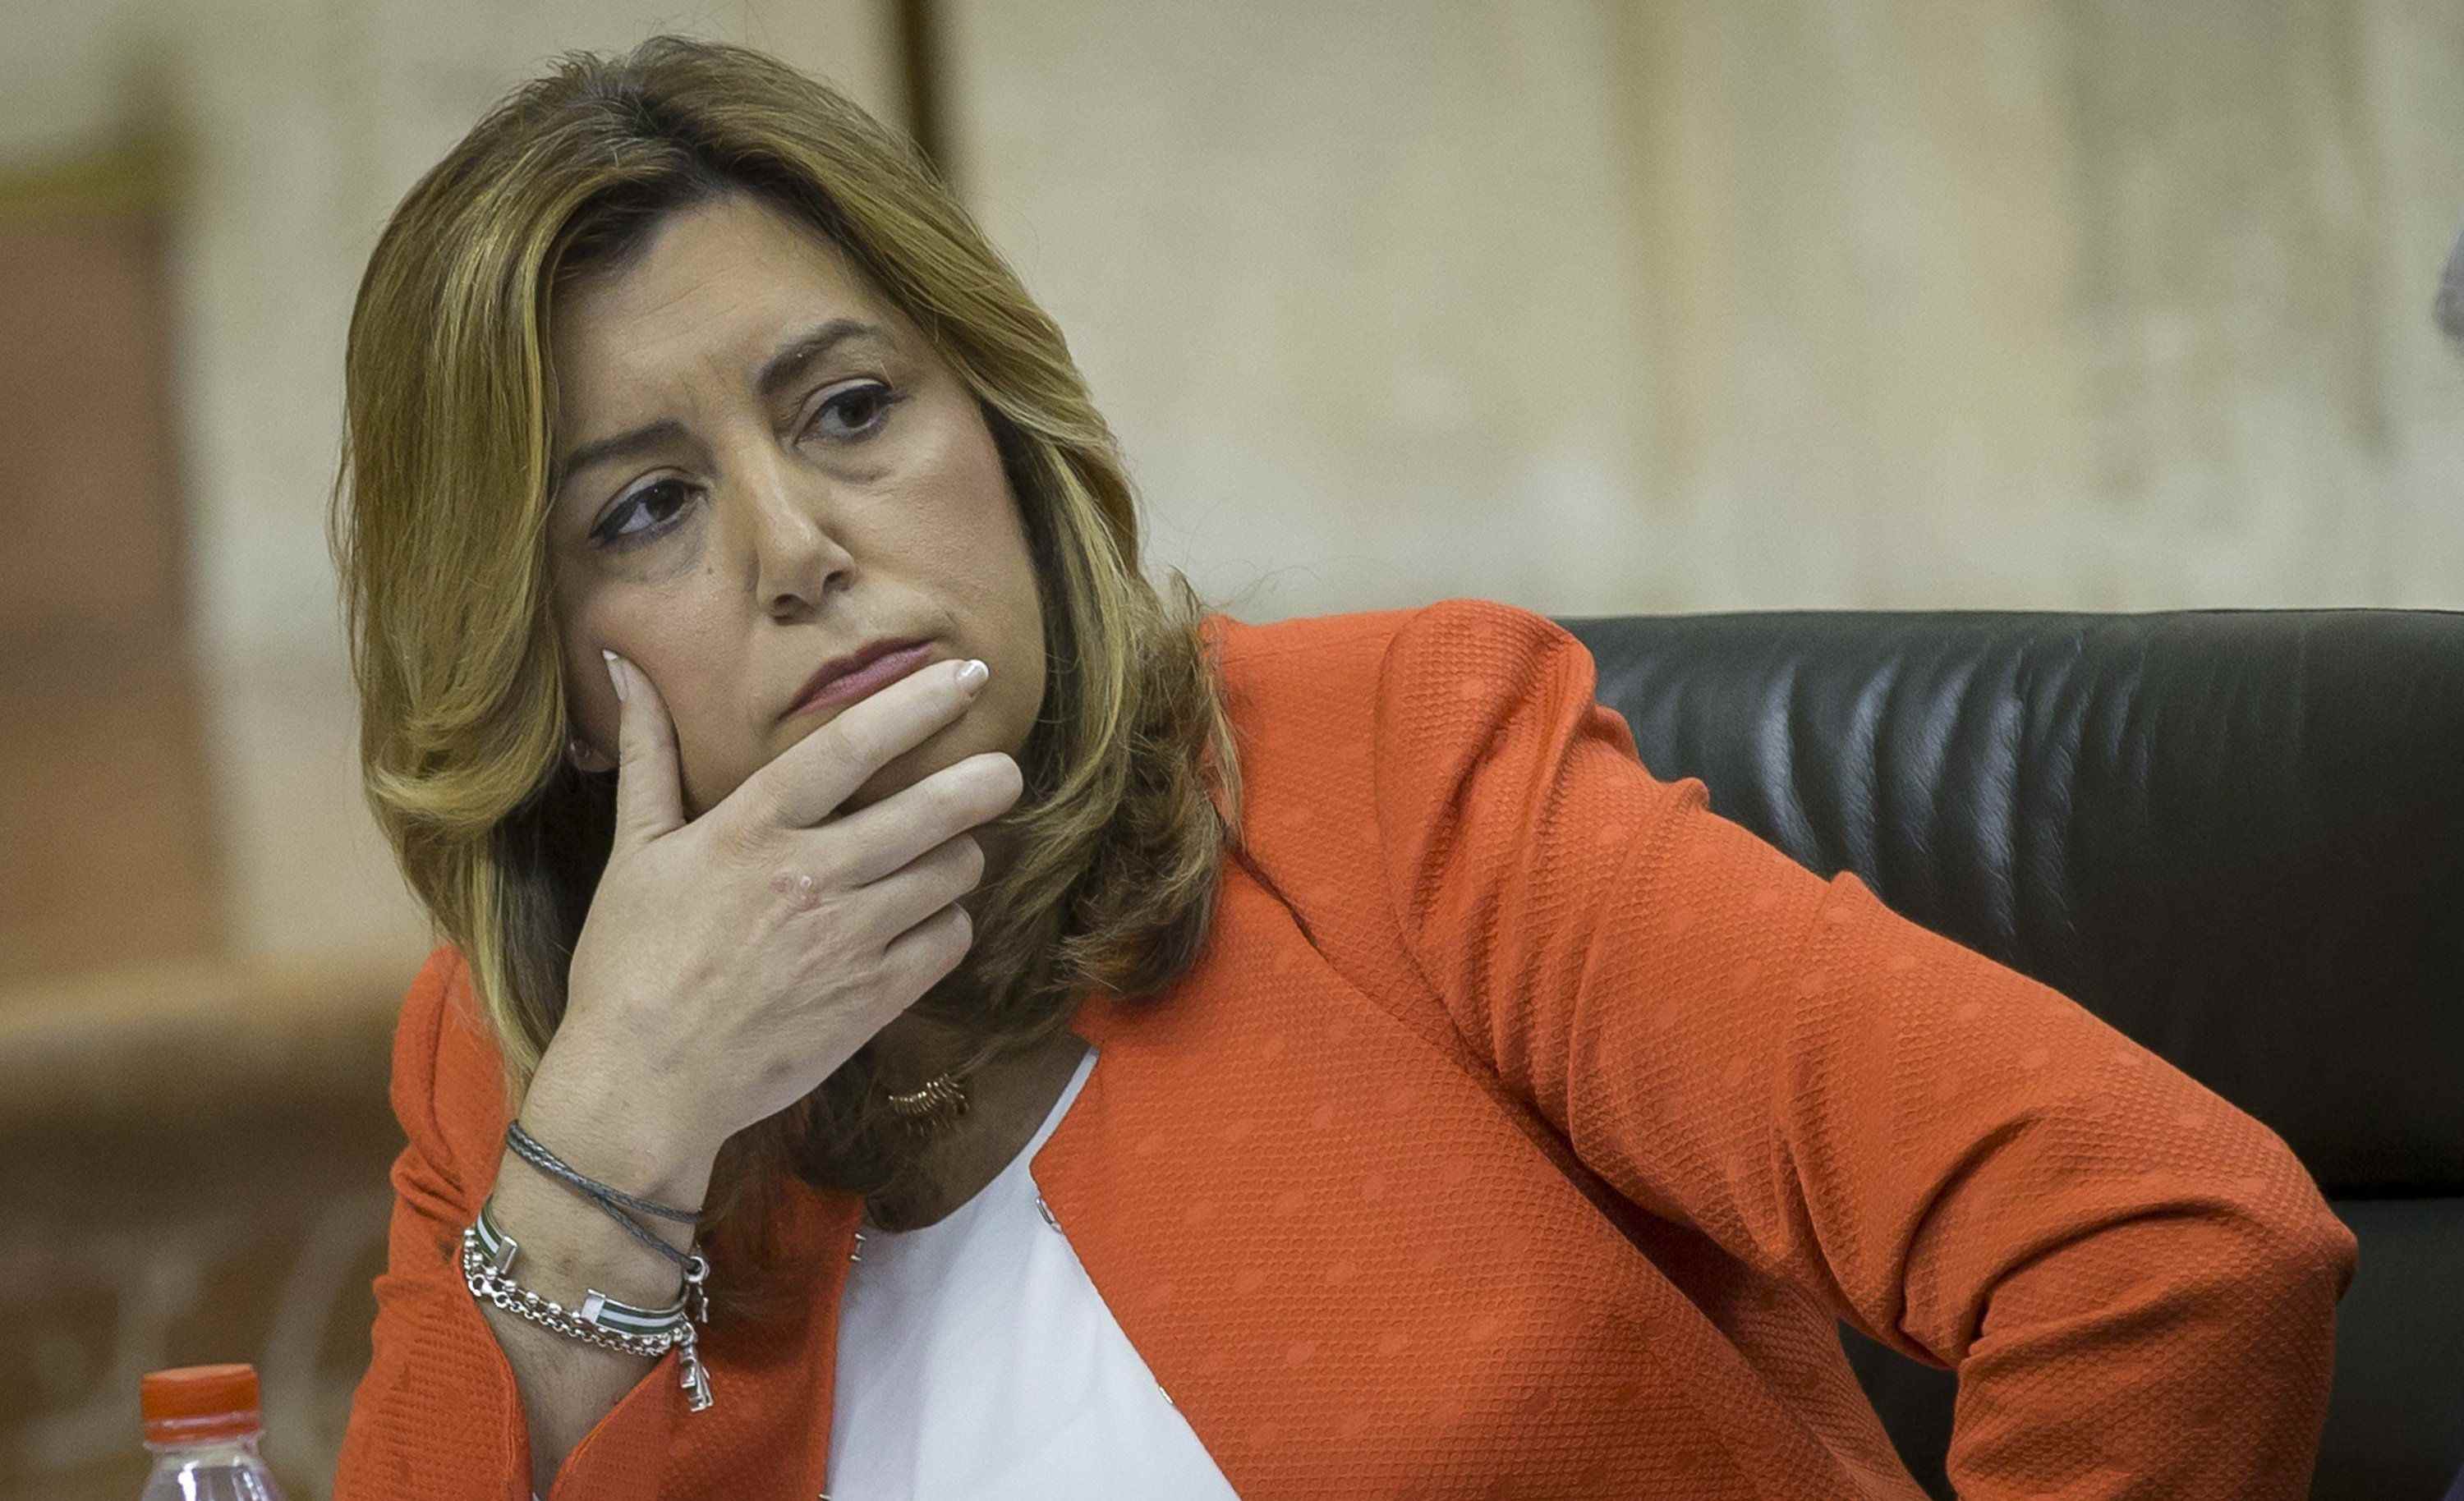 La investidura fallida, Díaz y Chacón vuelven a debilitar a Sánchez